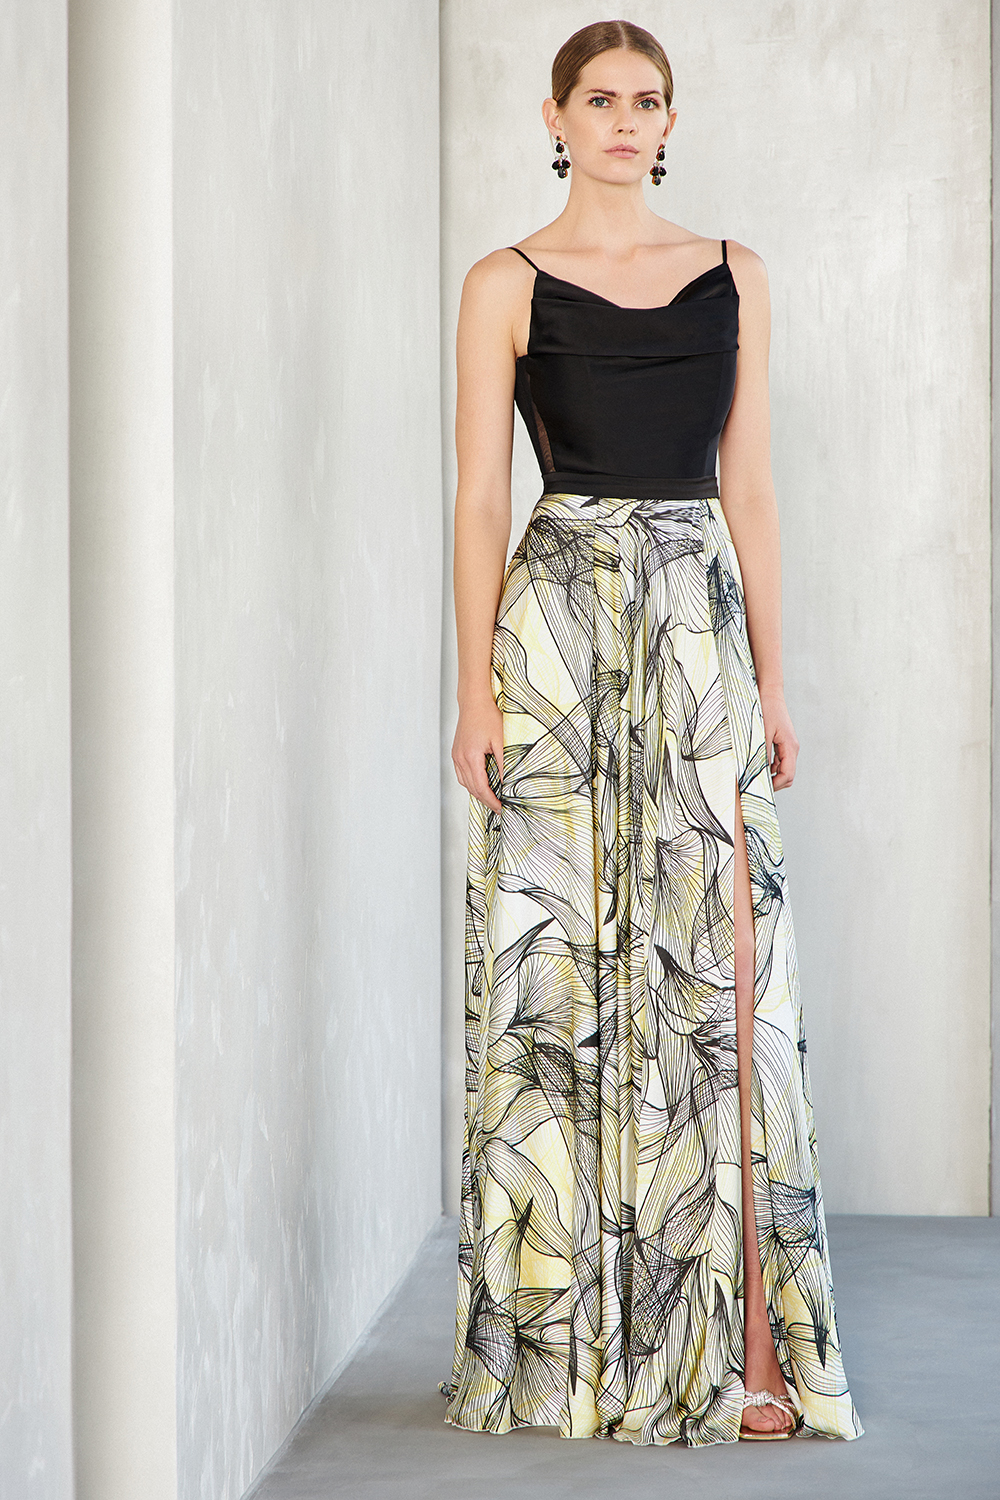 Коктейльные платья / Long cocktail dress with satin printed skirt and solid color top